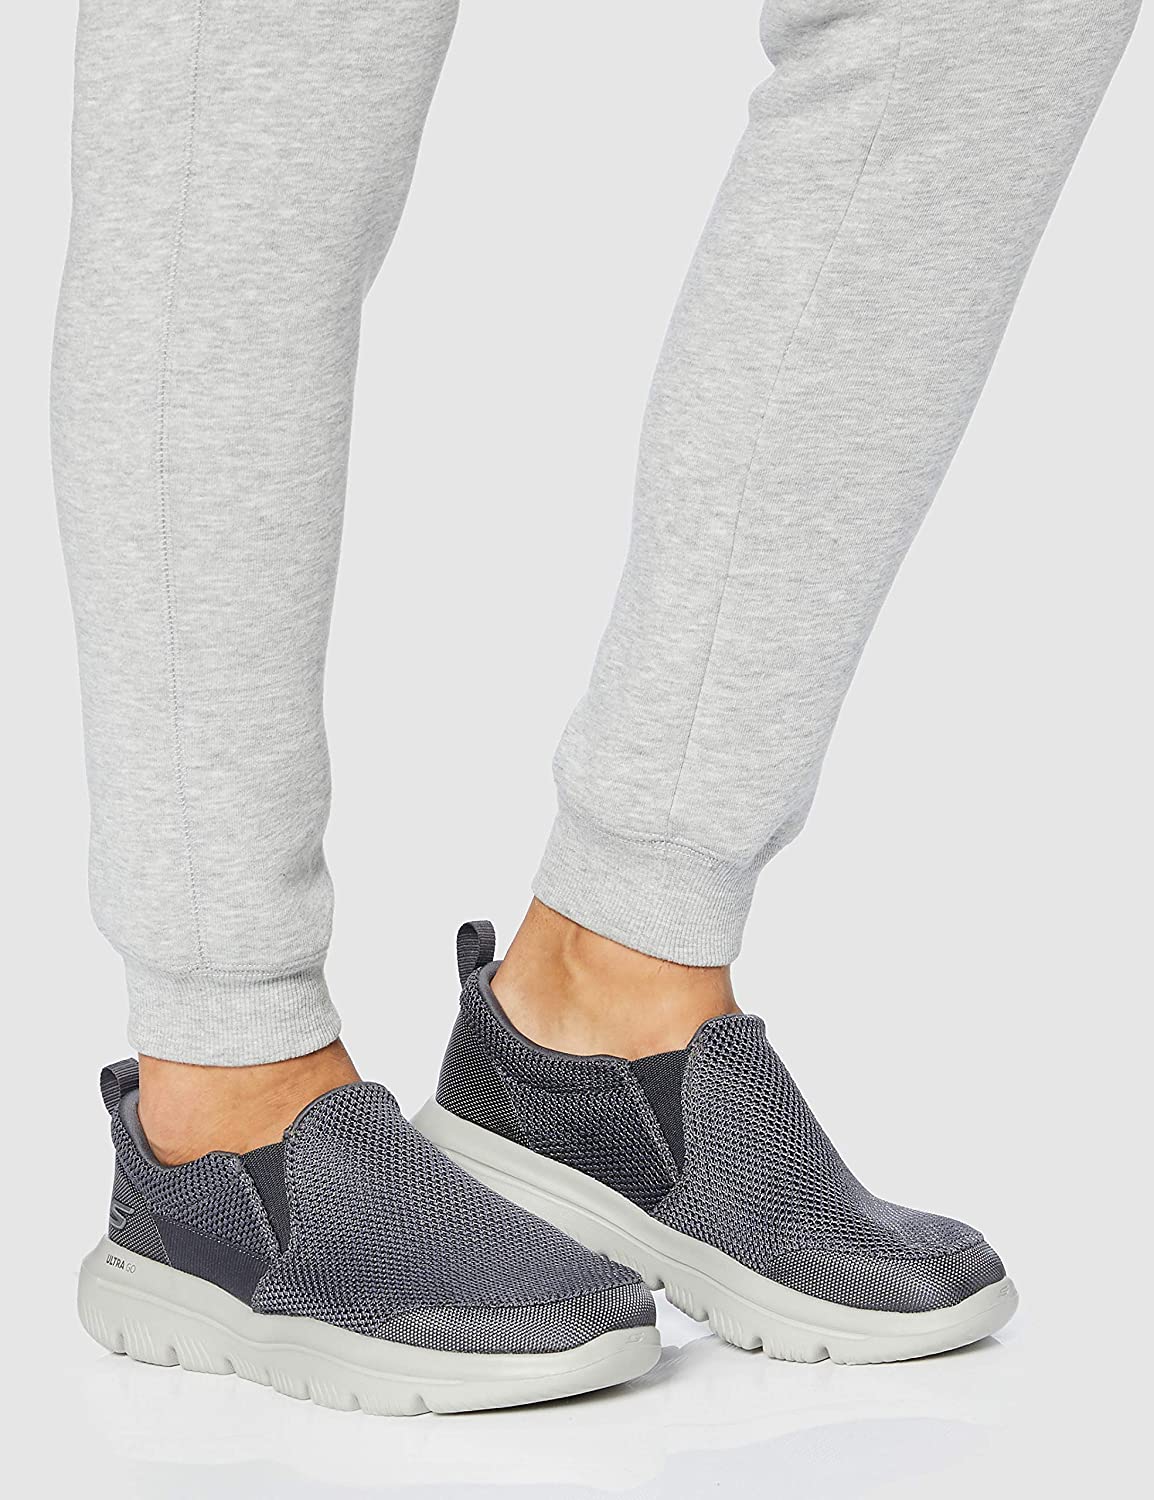 Skechers Men's Go Walk Evolution Ultra-Impeccable Sneaker | eBay